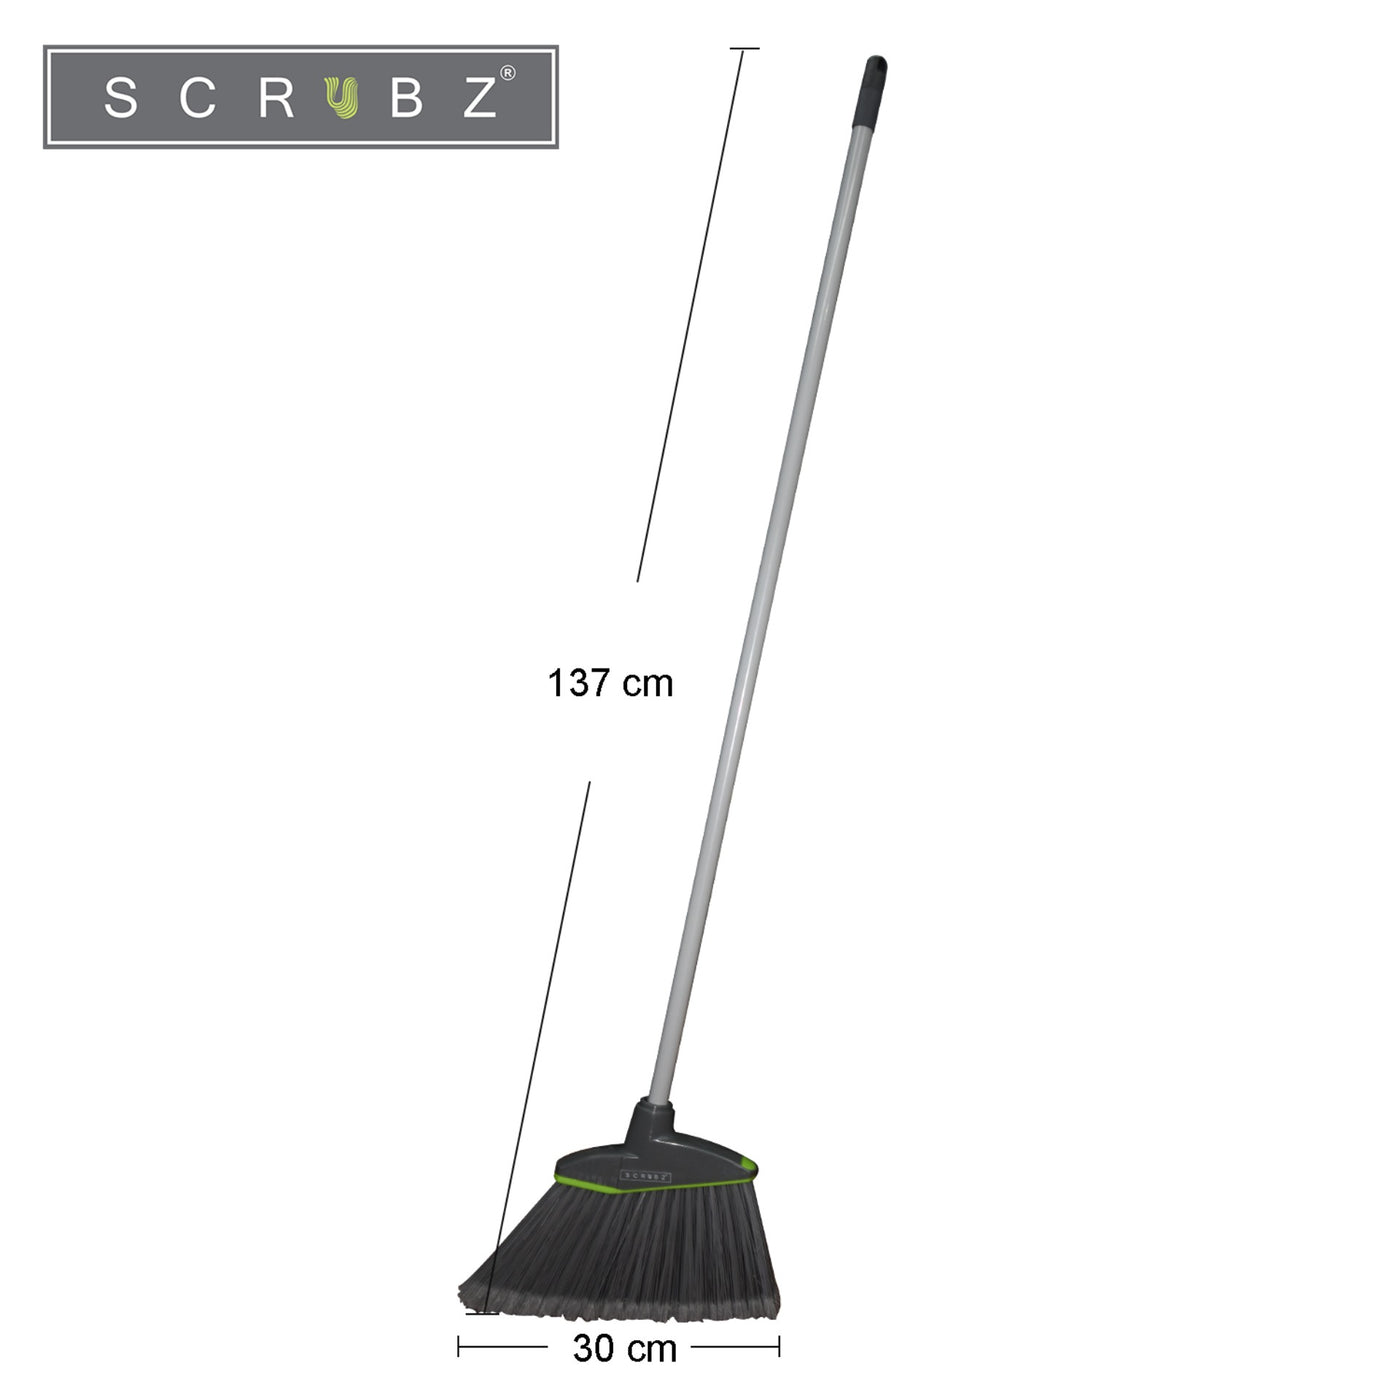 SCRUBZ Premium Long Angle Broom 137x30cm